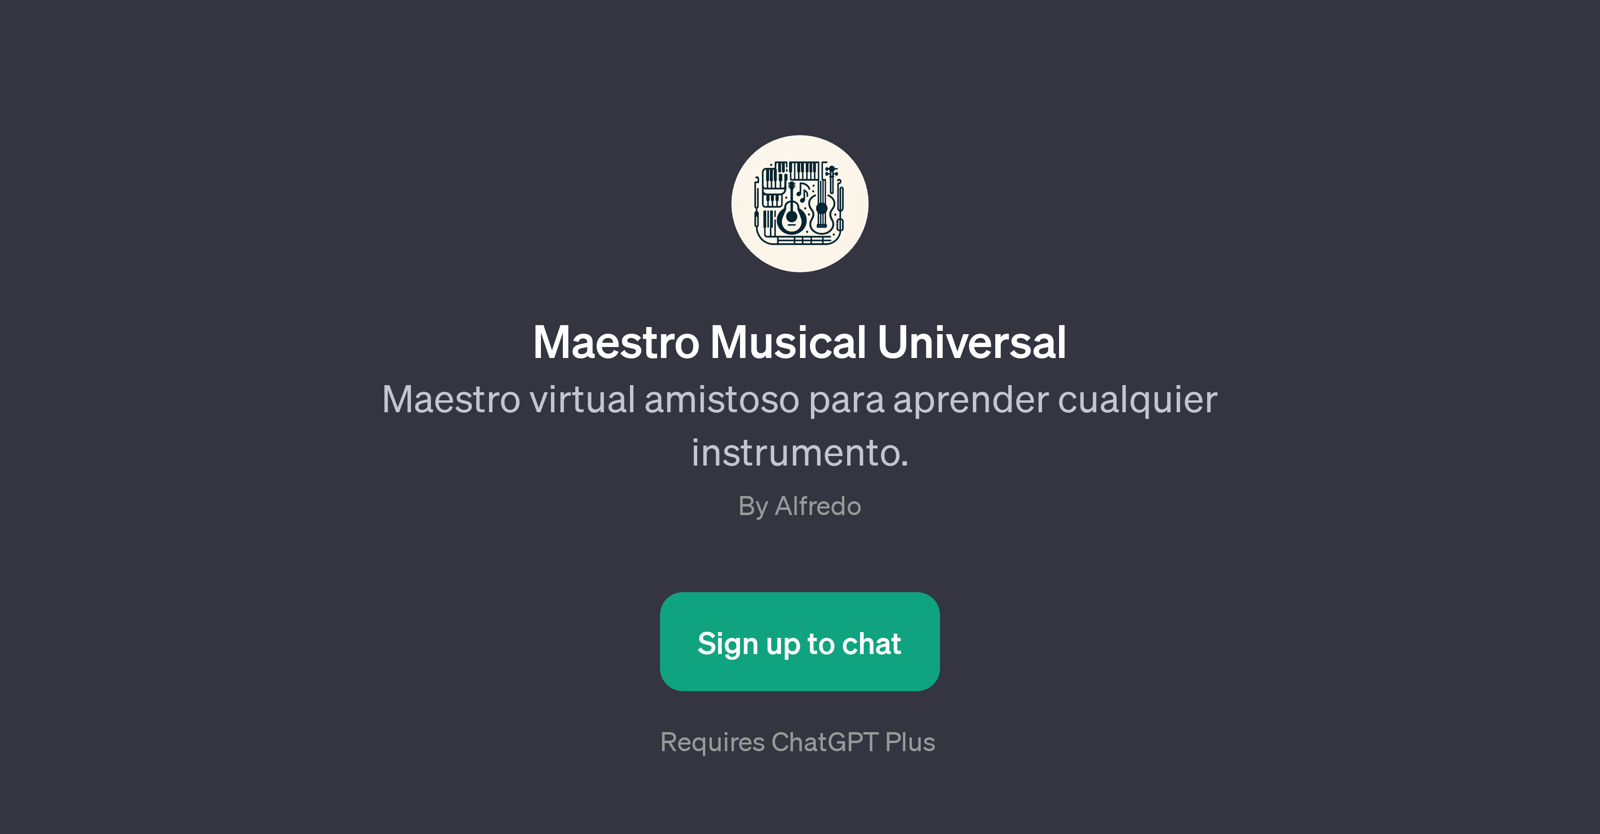 Maestro Musical Universal website